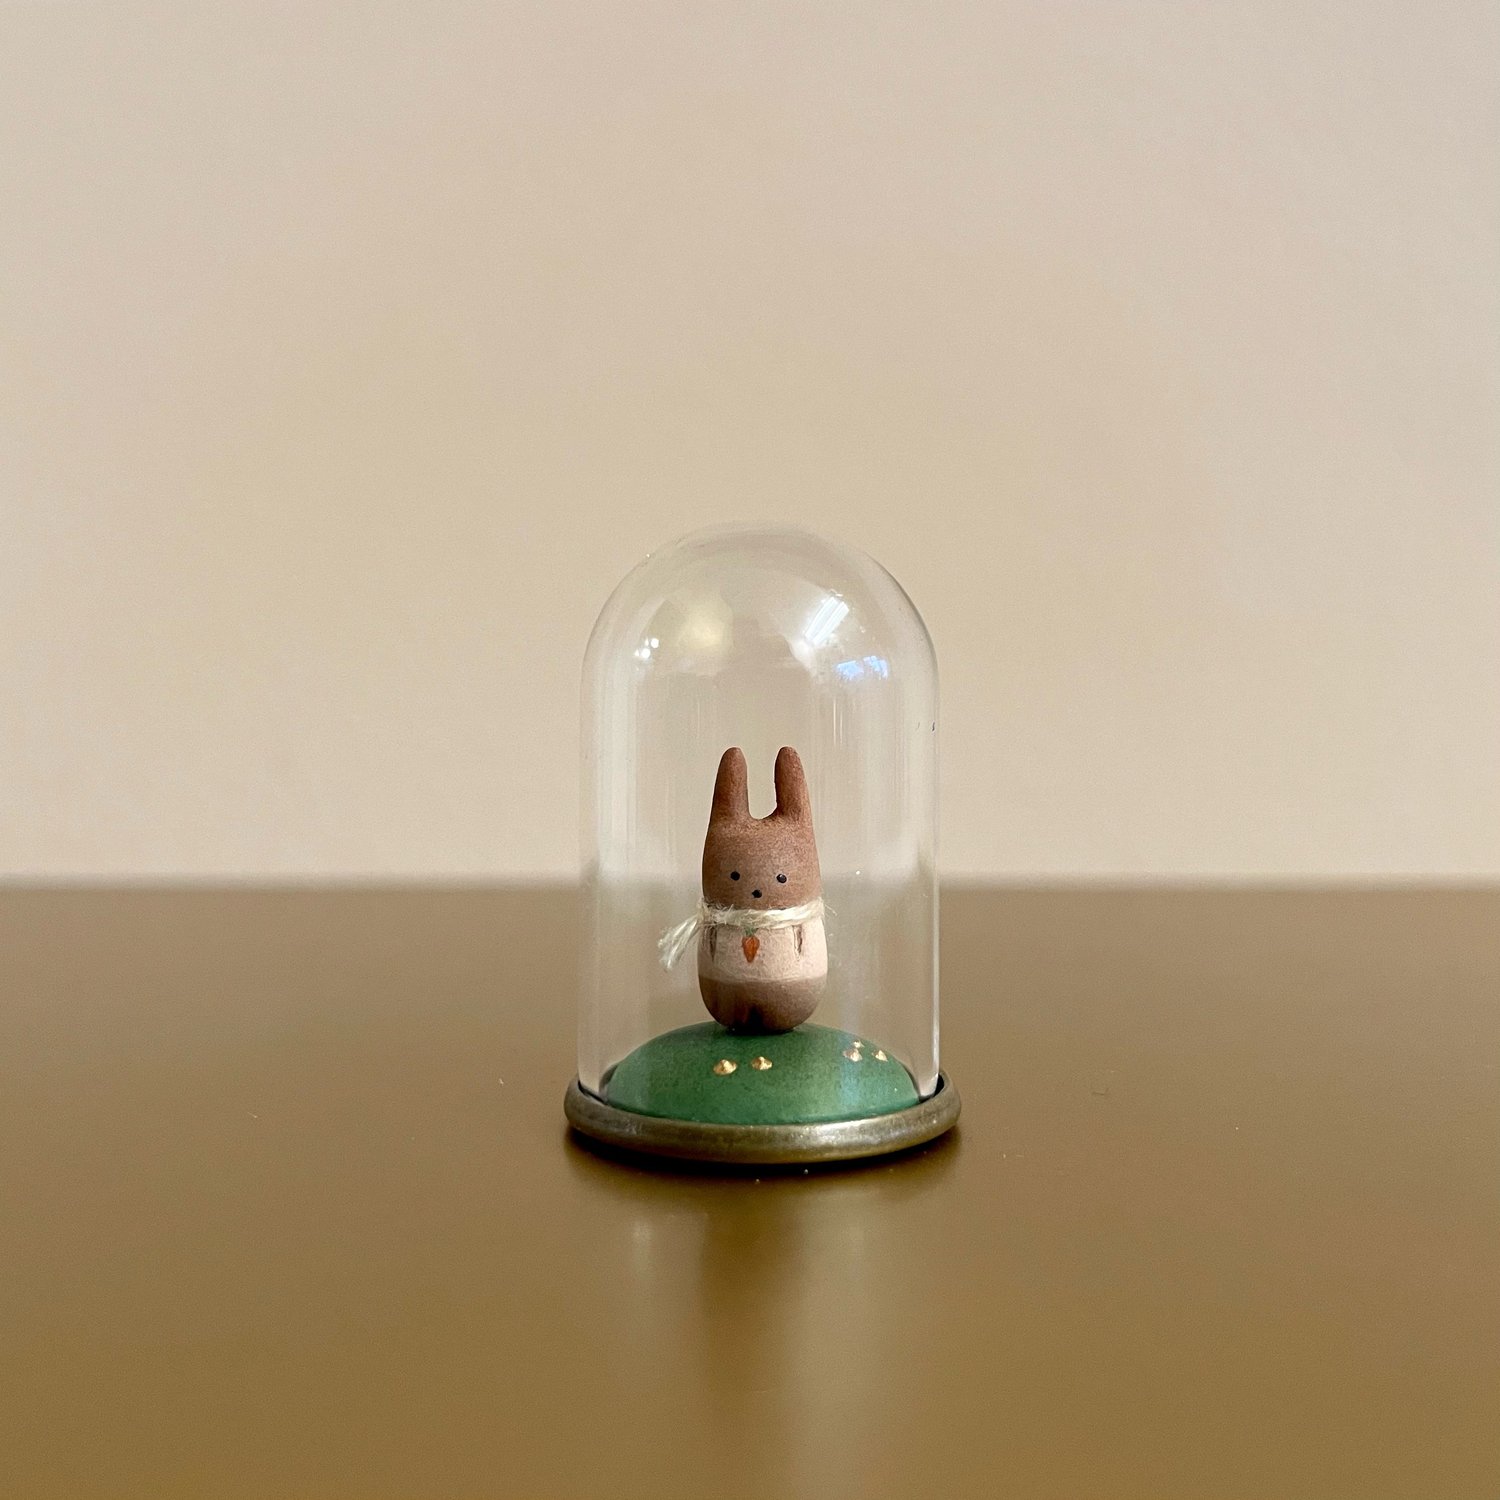 Image of Dorimu Miniature Bunny in a miniature glass dome